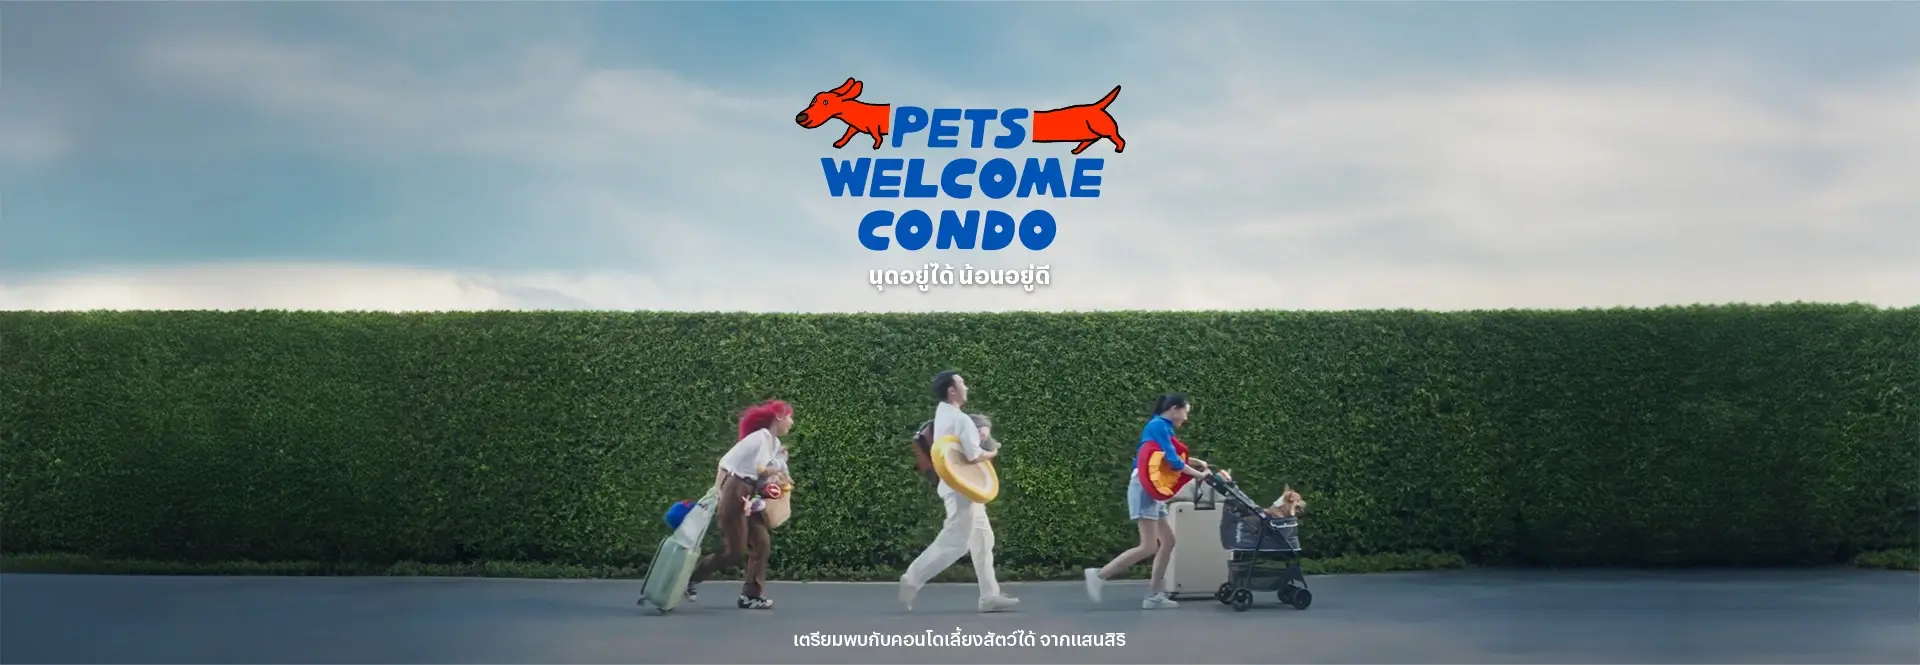 Pets Welcome Condo